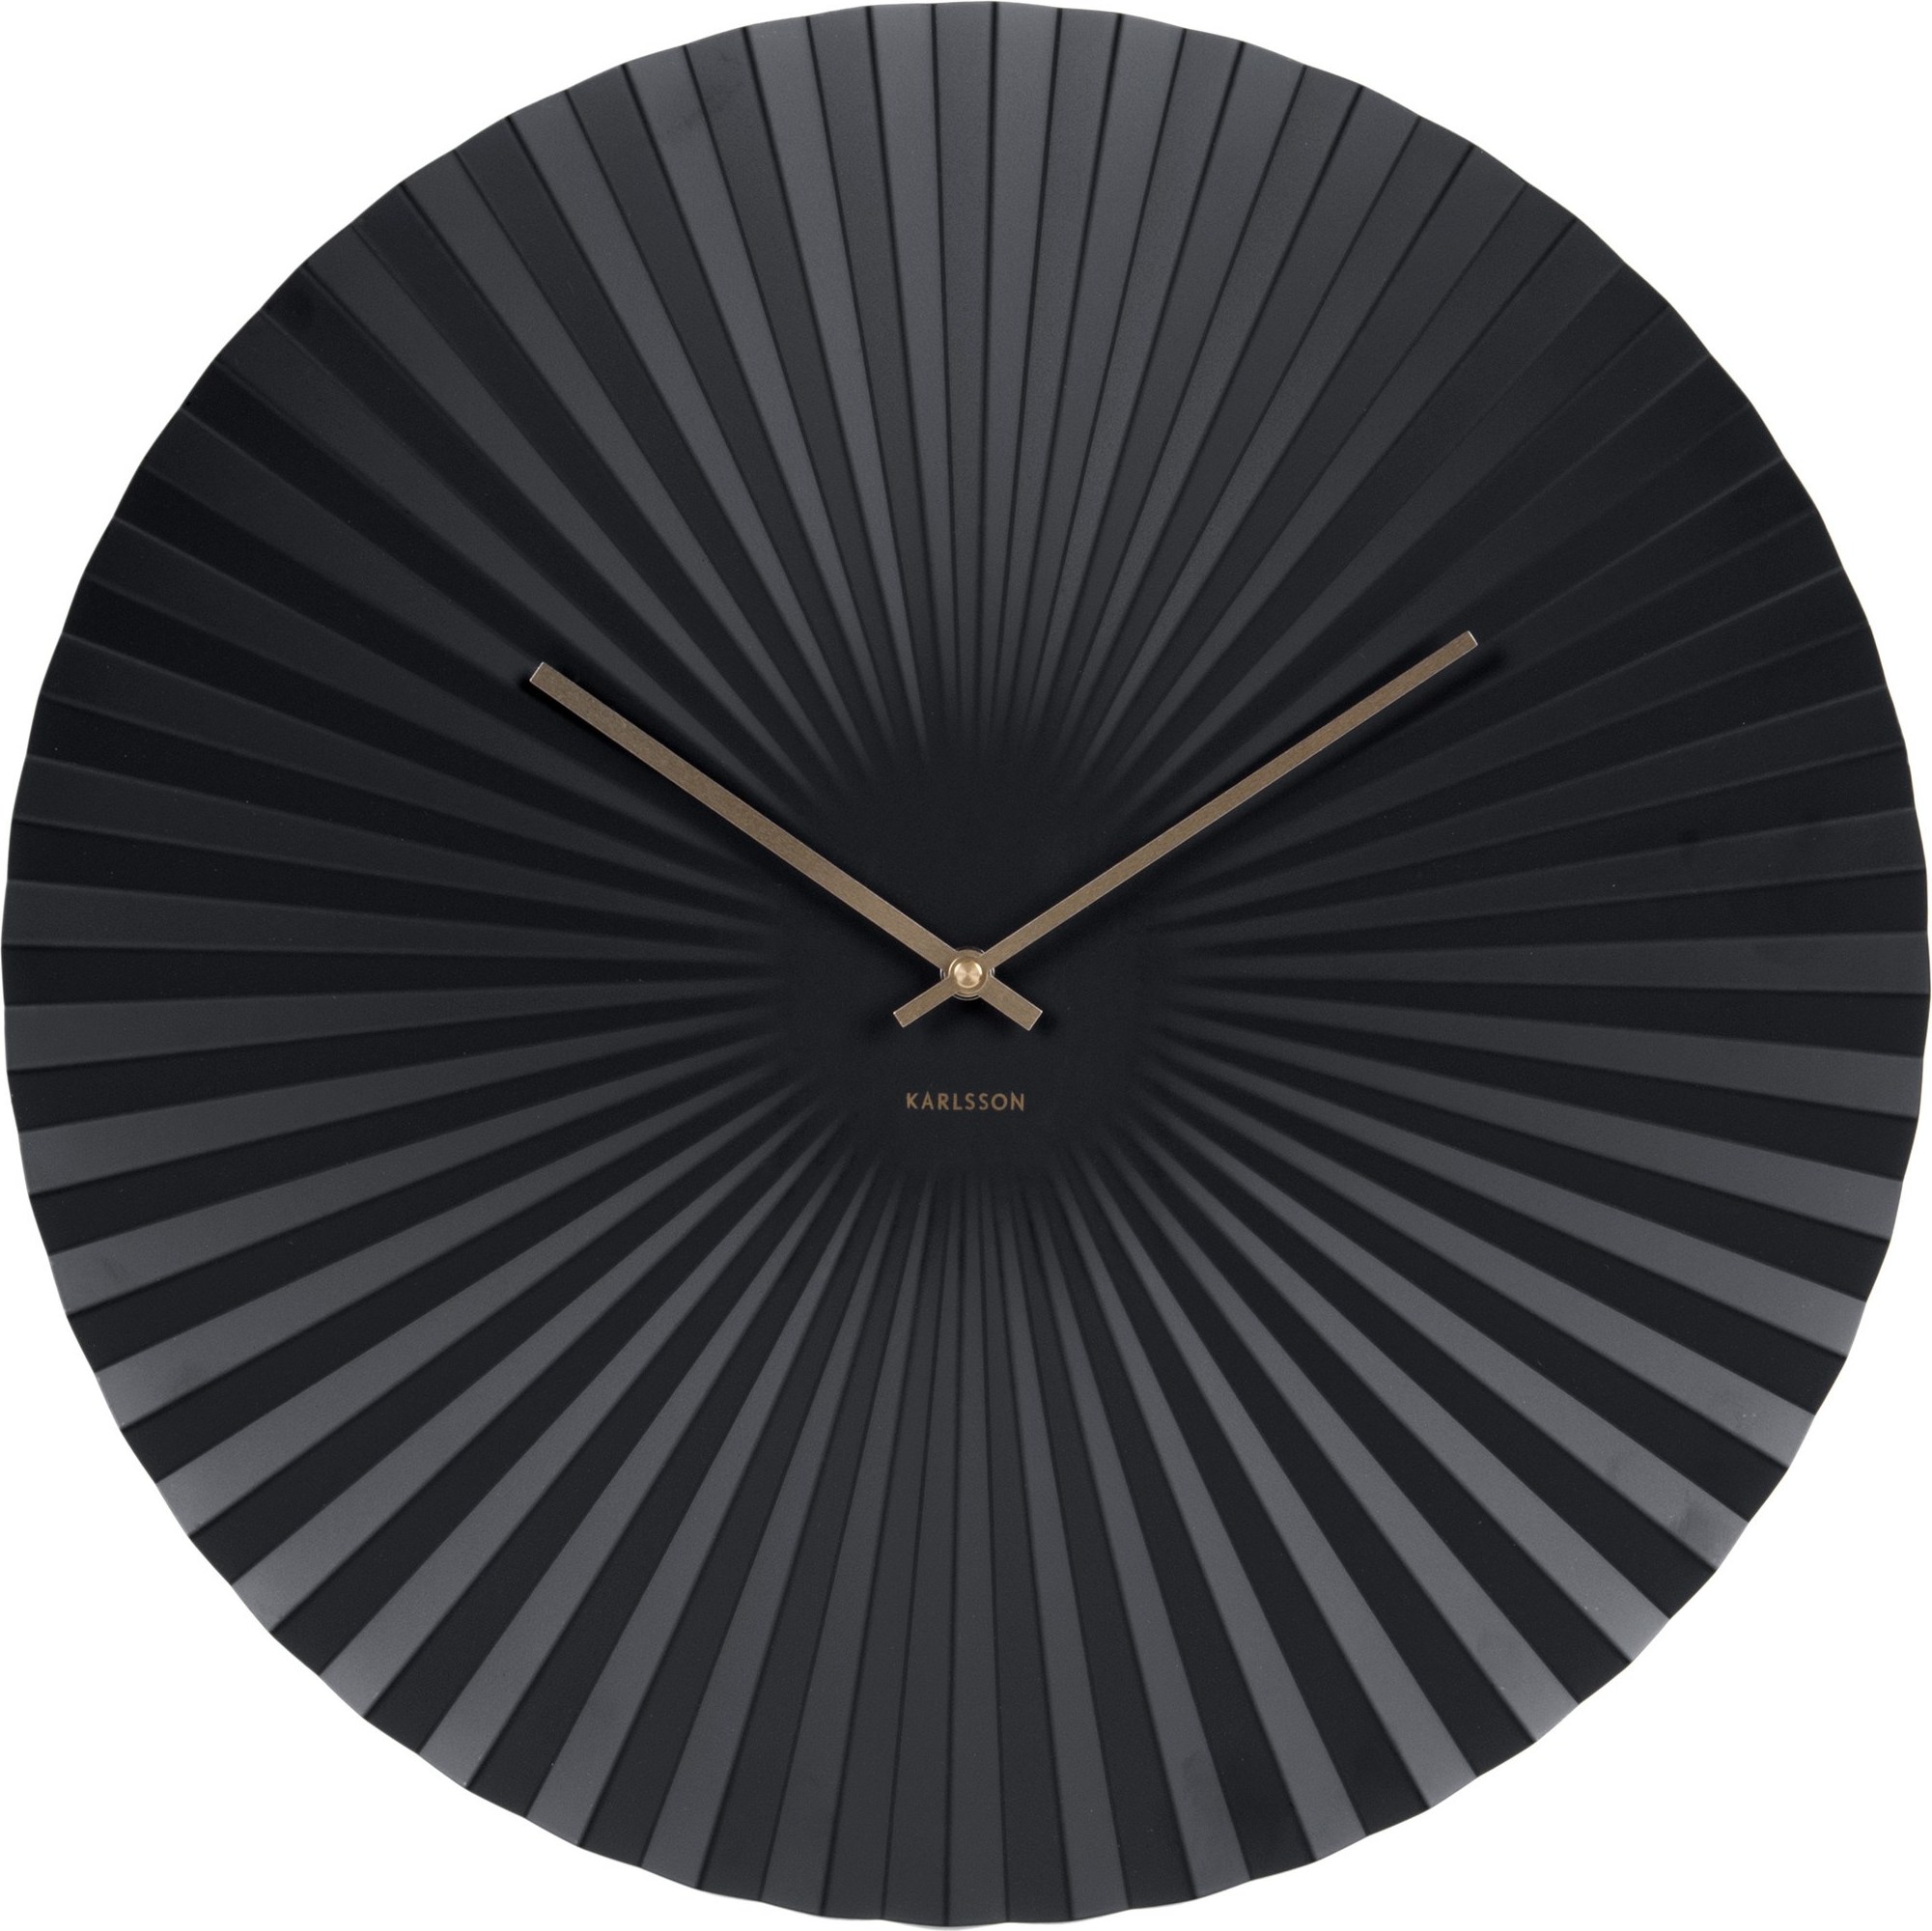 Часы настенные 50 см. Часы Karlsson настенные. Настенные часы Karlsson ka4115. Часы настенные большие черные. Дизайнерские настенные часы черные.